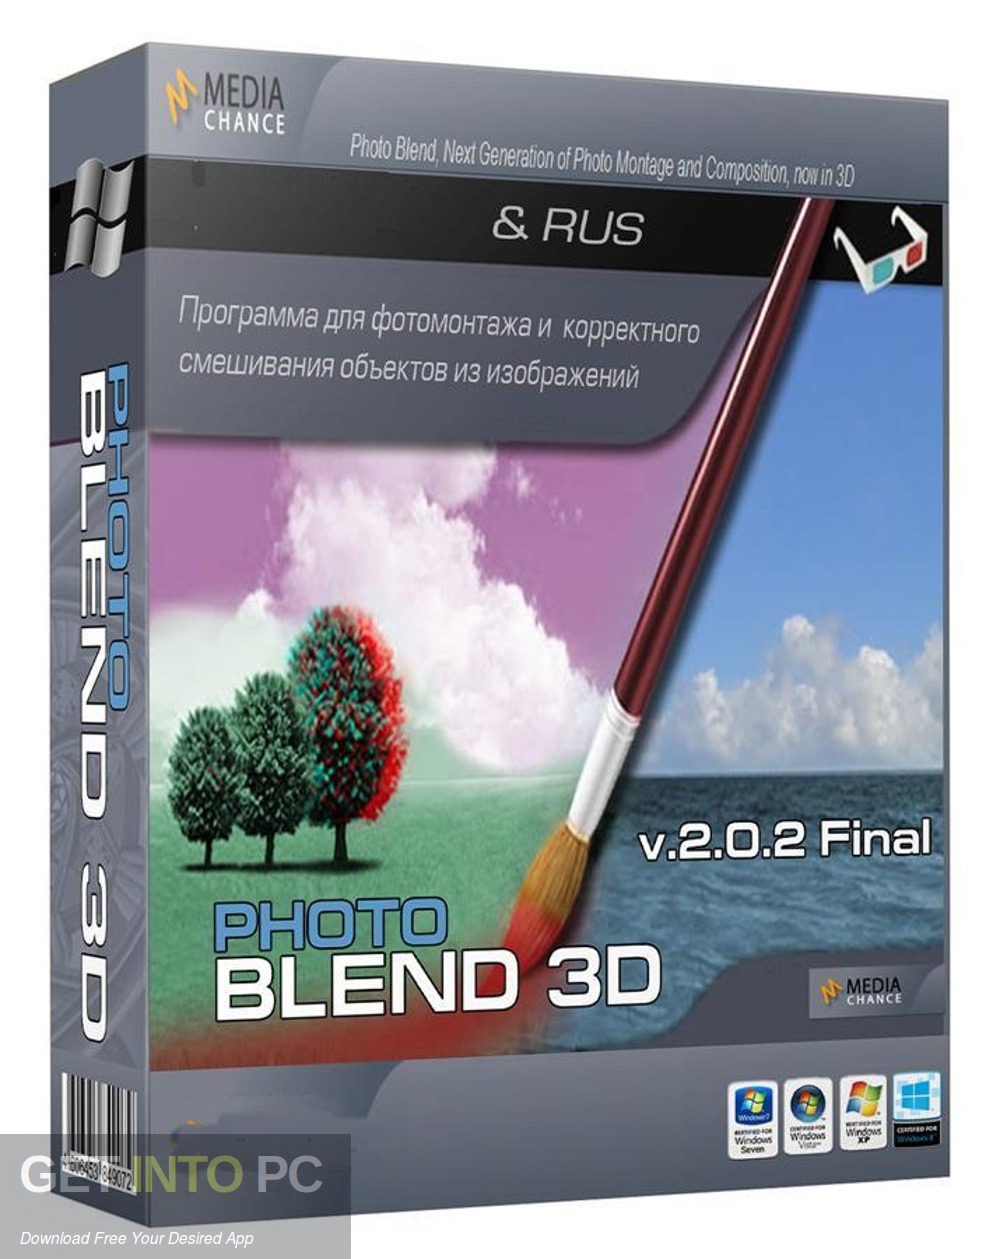 Mediachance Photo BLEND 3D Free Download - GetintoPC.com